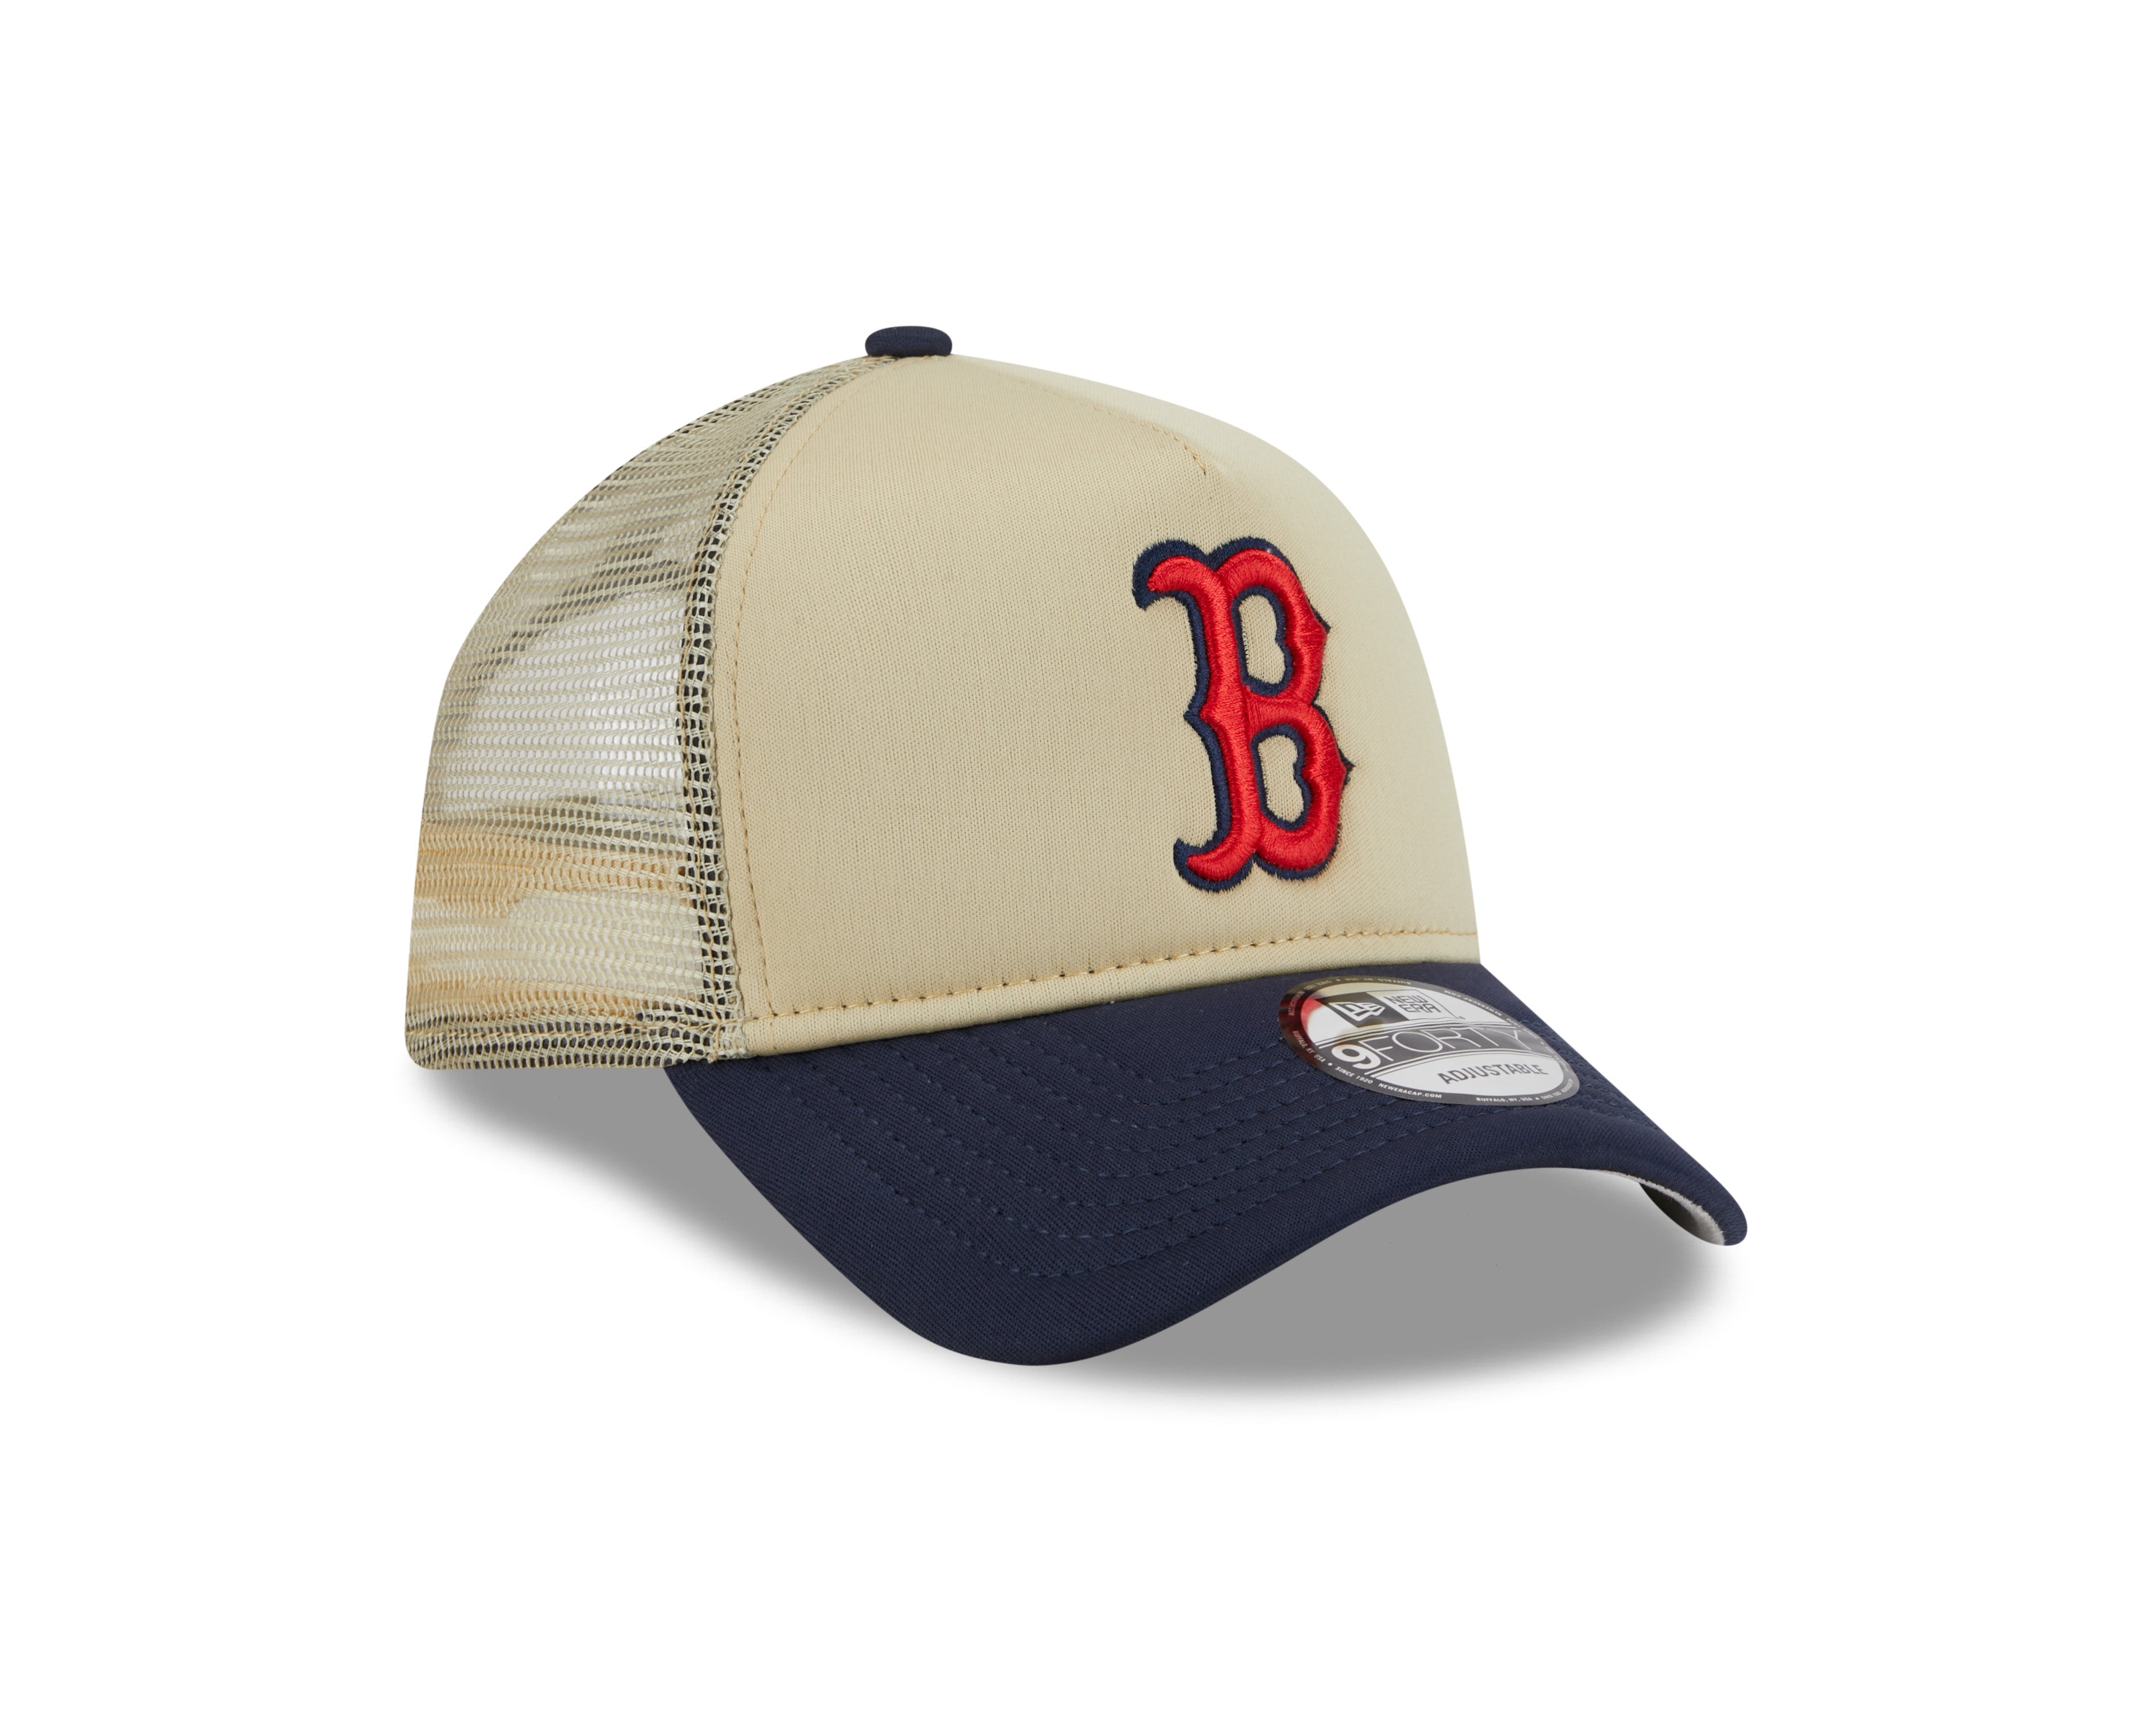 New Era - Boston Red Sox - All Day Trucker - Khaki/Navy - Headz Up 